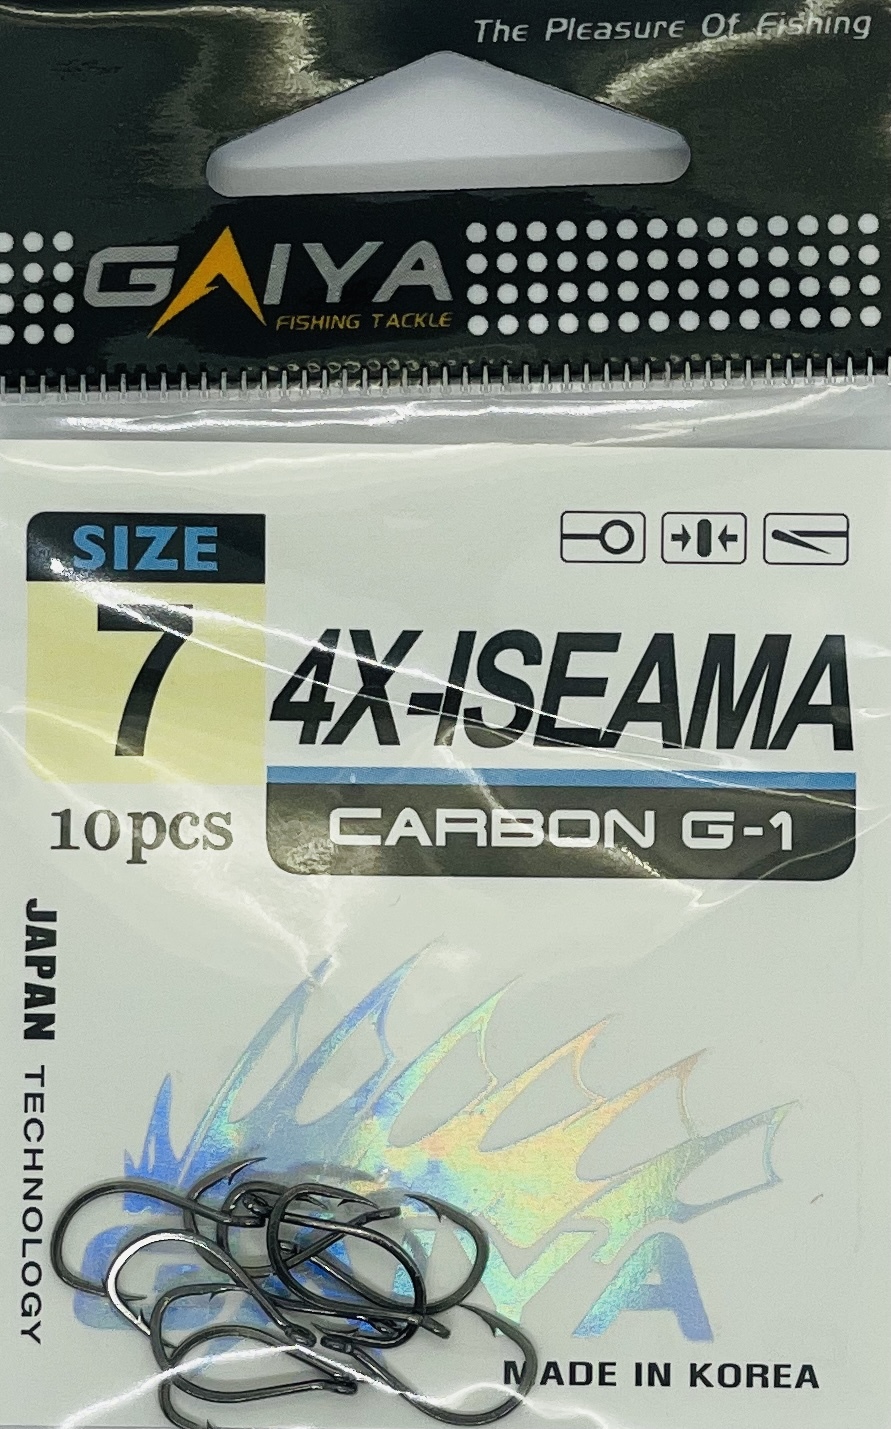 Крючки одинарные 4X-ISEAMA, размер 7, 10 шт.